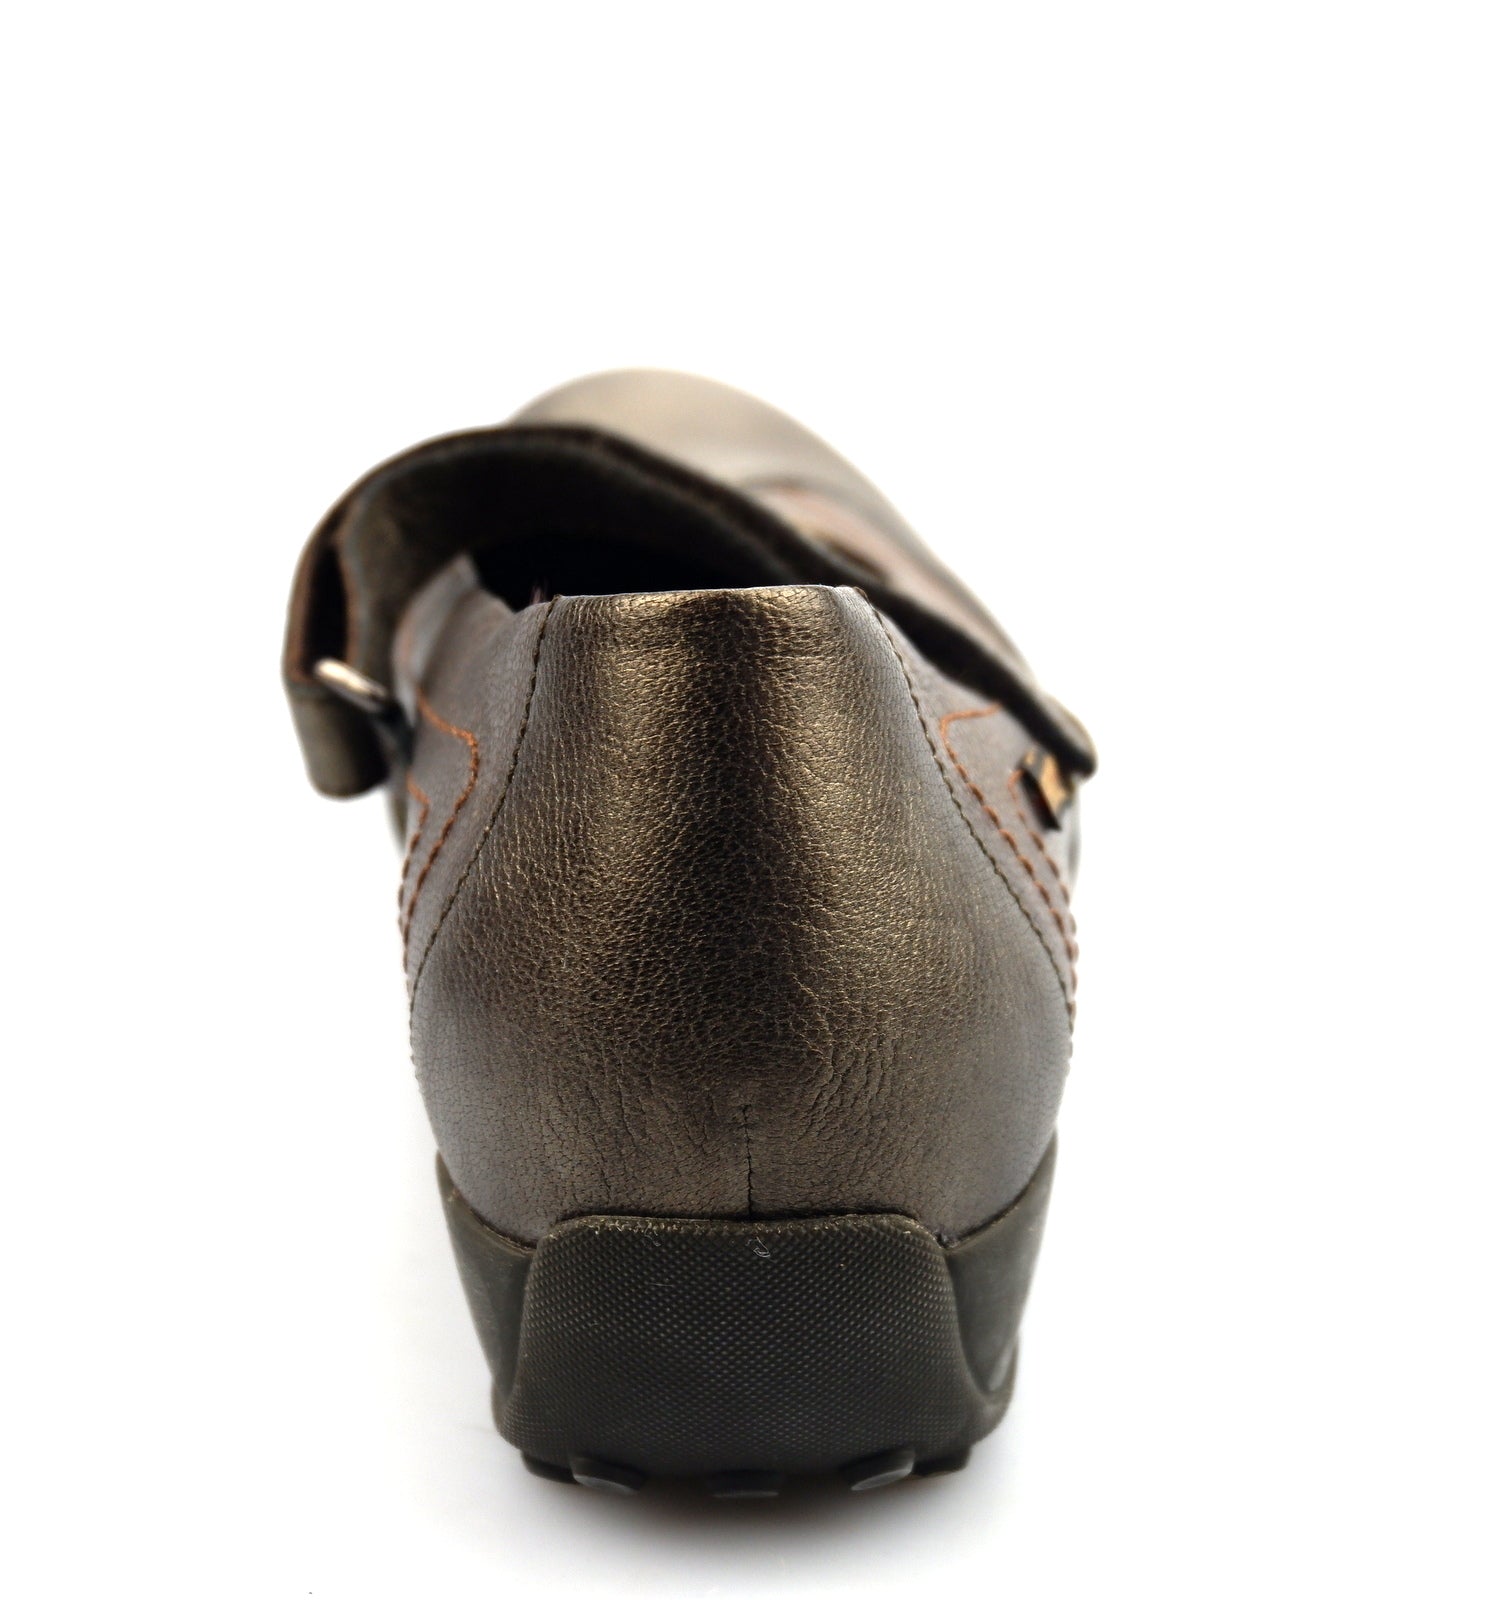 Mephisto LEIDINA bronze leather shoe for women with velcro closure - ChaplinshoesMephisto LEIDINA bronze leather shoe for women with velcro closureMephisto